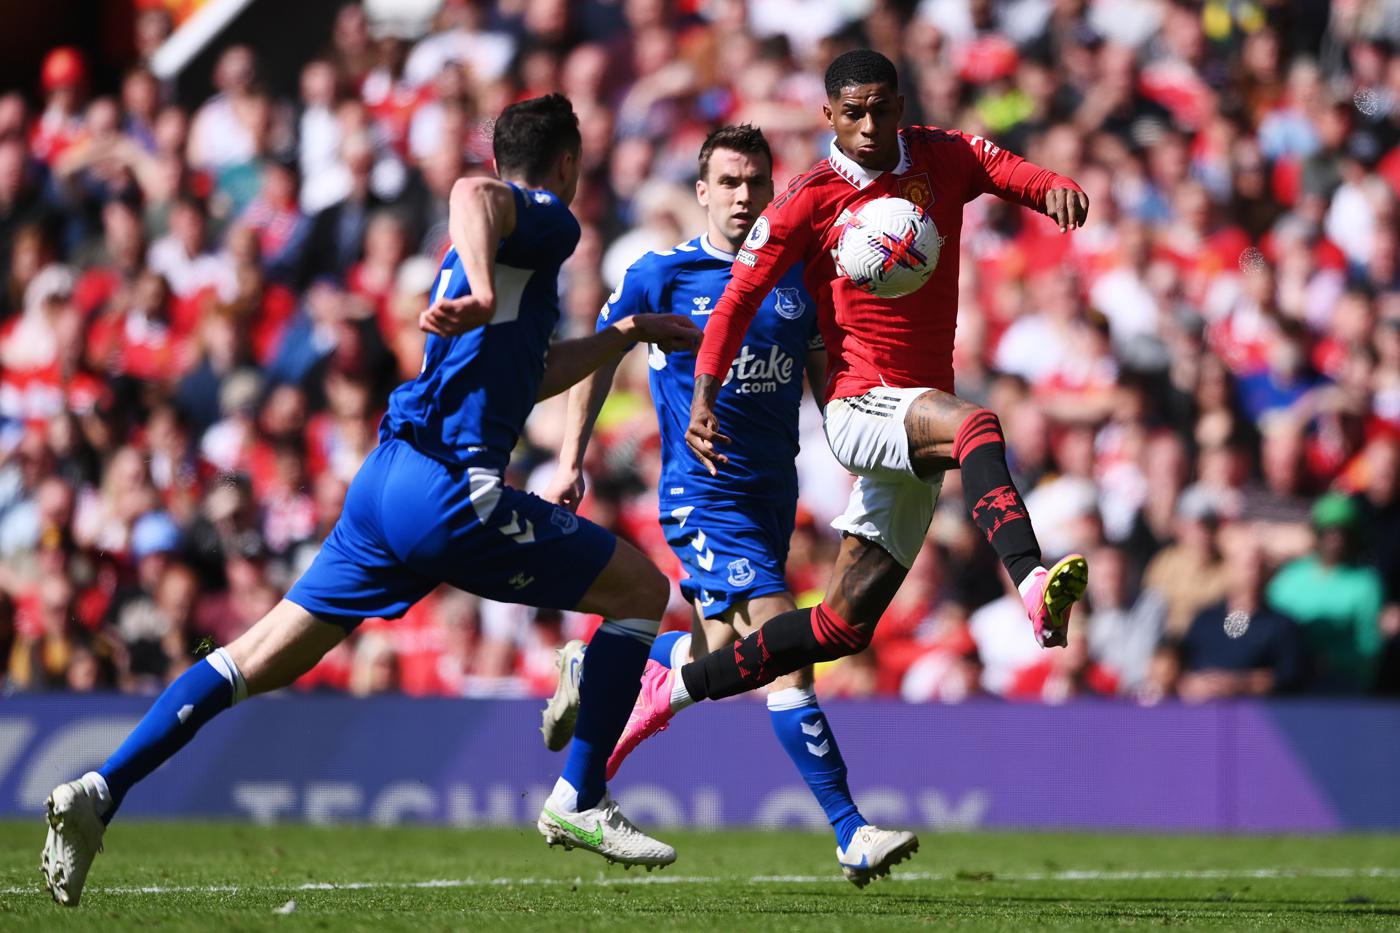 Man United vs Everton - 2-0. English Championship, round 30. Match Review, Statistics